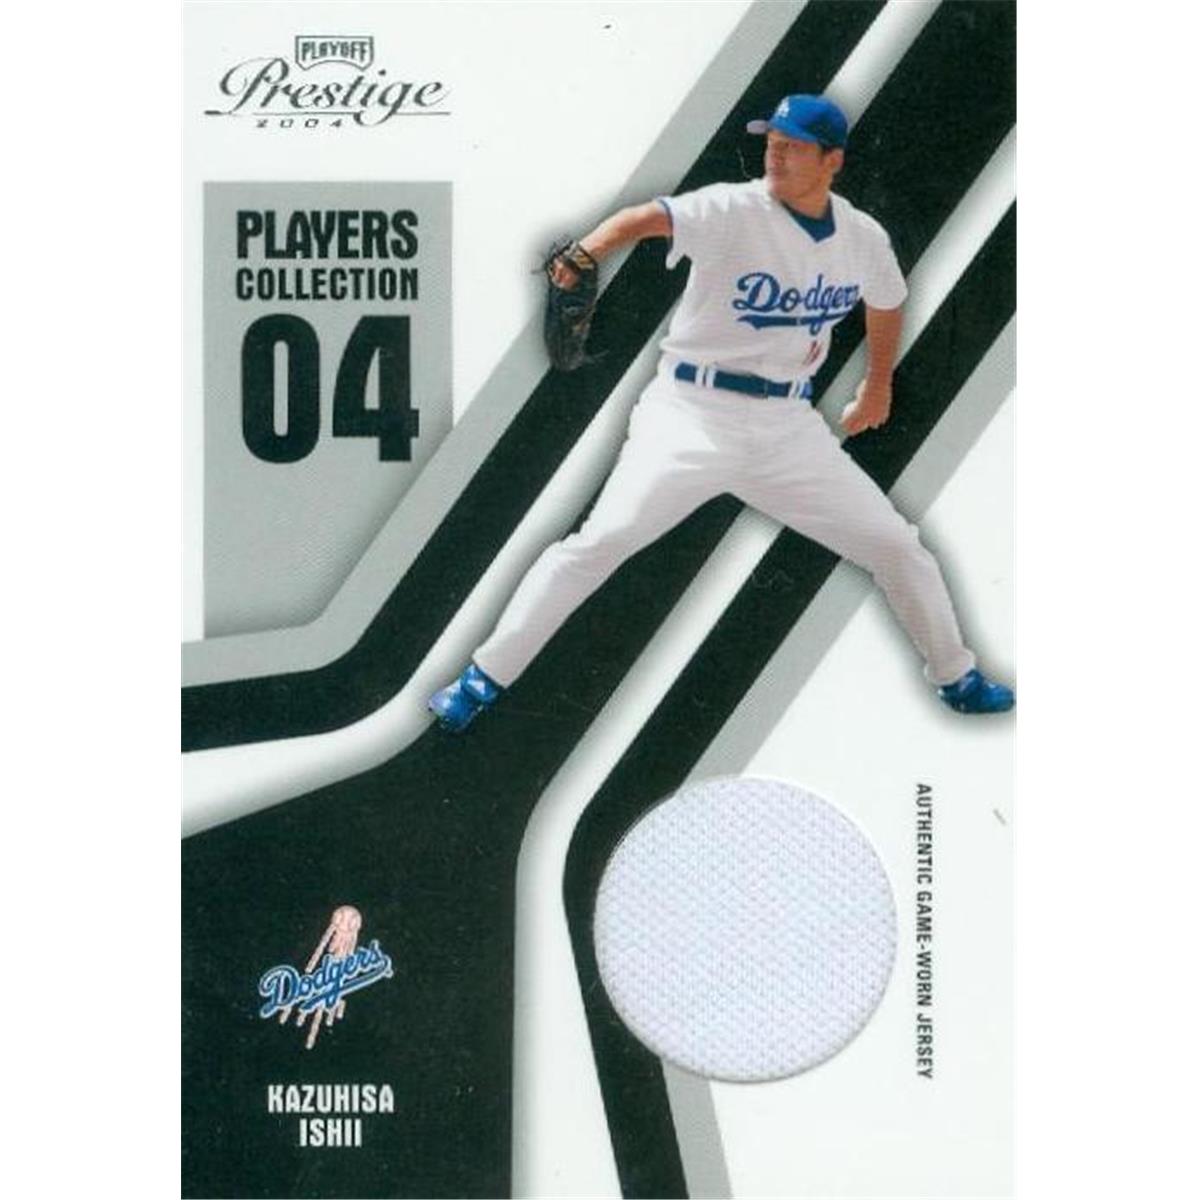 Autograph Warehouse 466577 Kazuhisa Ishii Baseball Card Player Los Angeles Dodgers, Japanese Worn Jersey Patch 2004 Playoff Prestige PC48